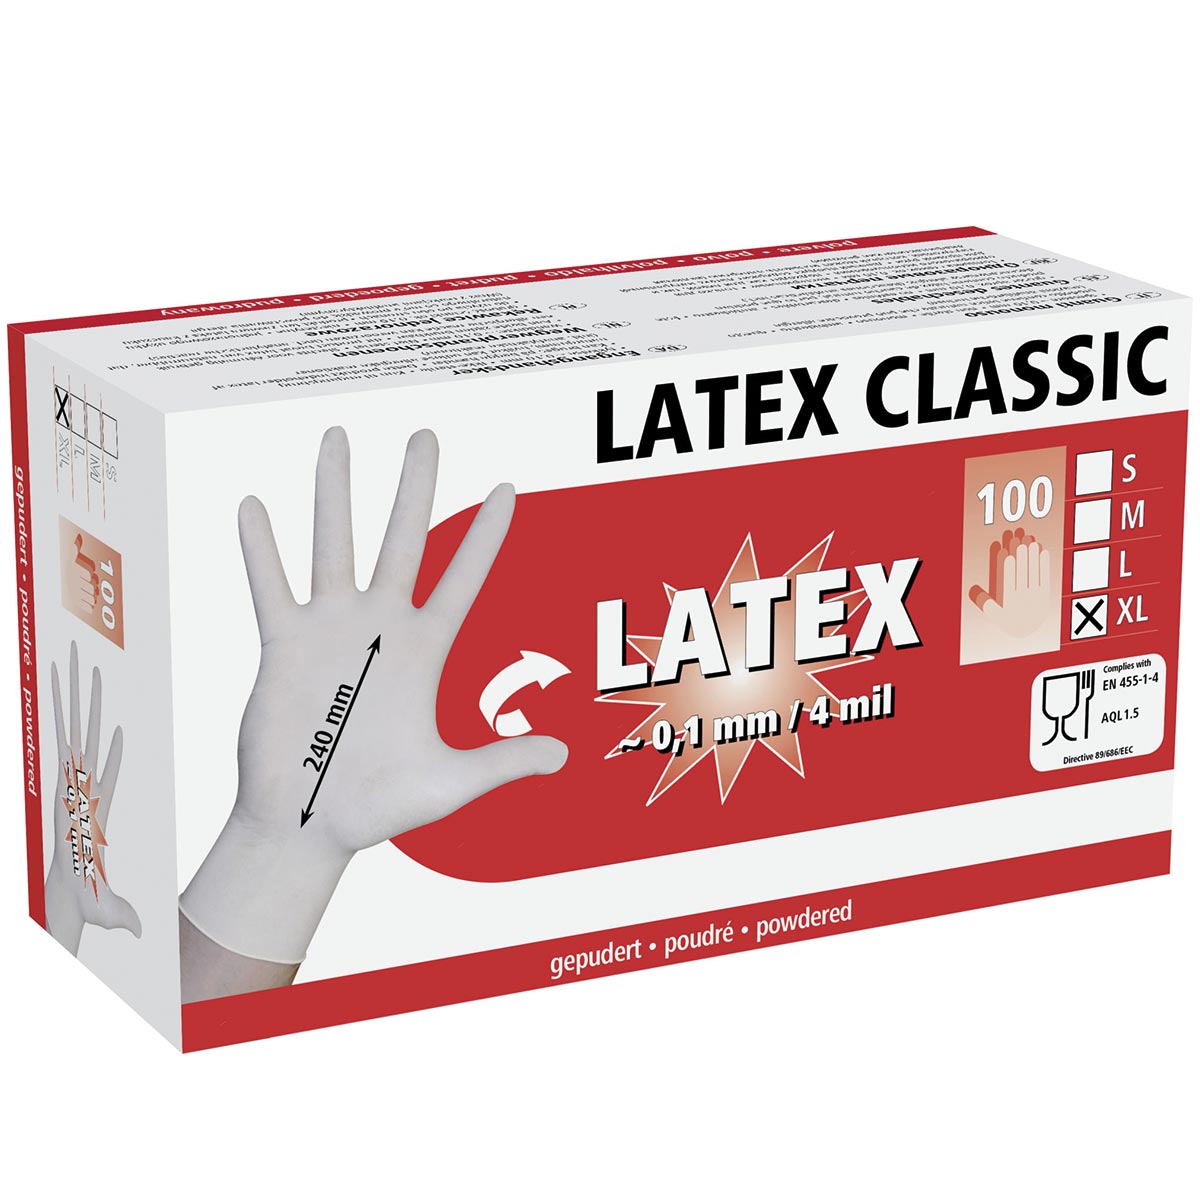 Engångshandskar Latex Classic L